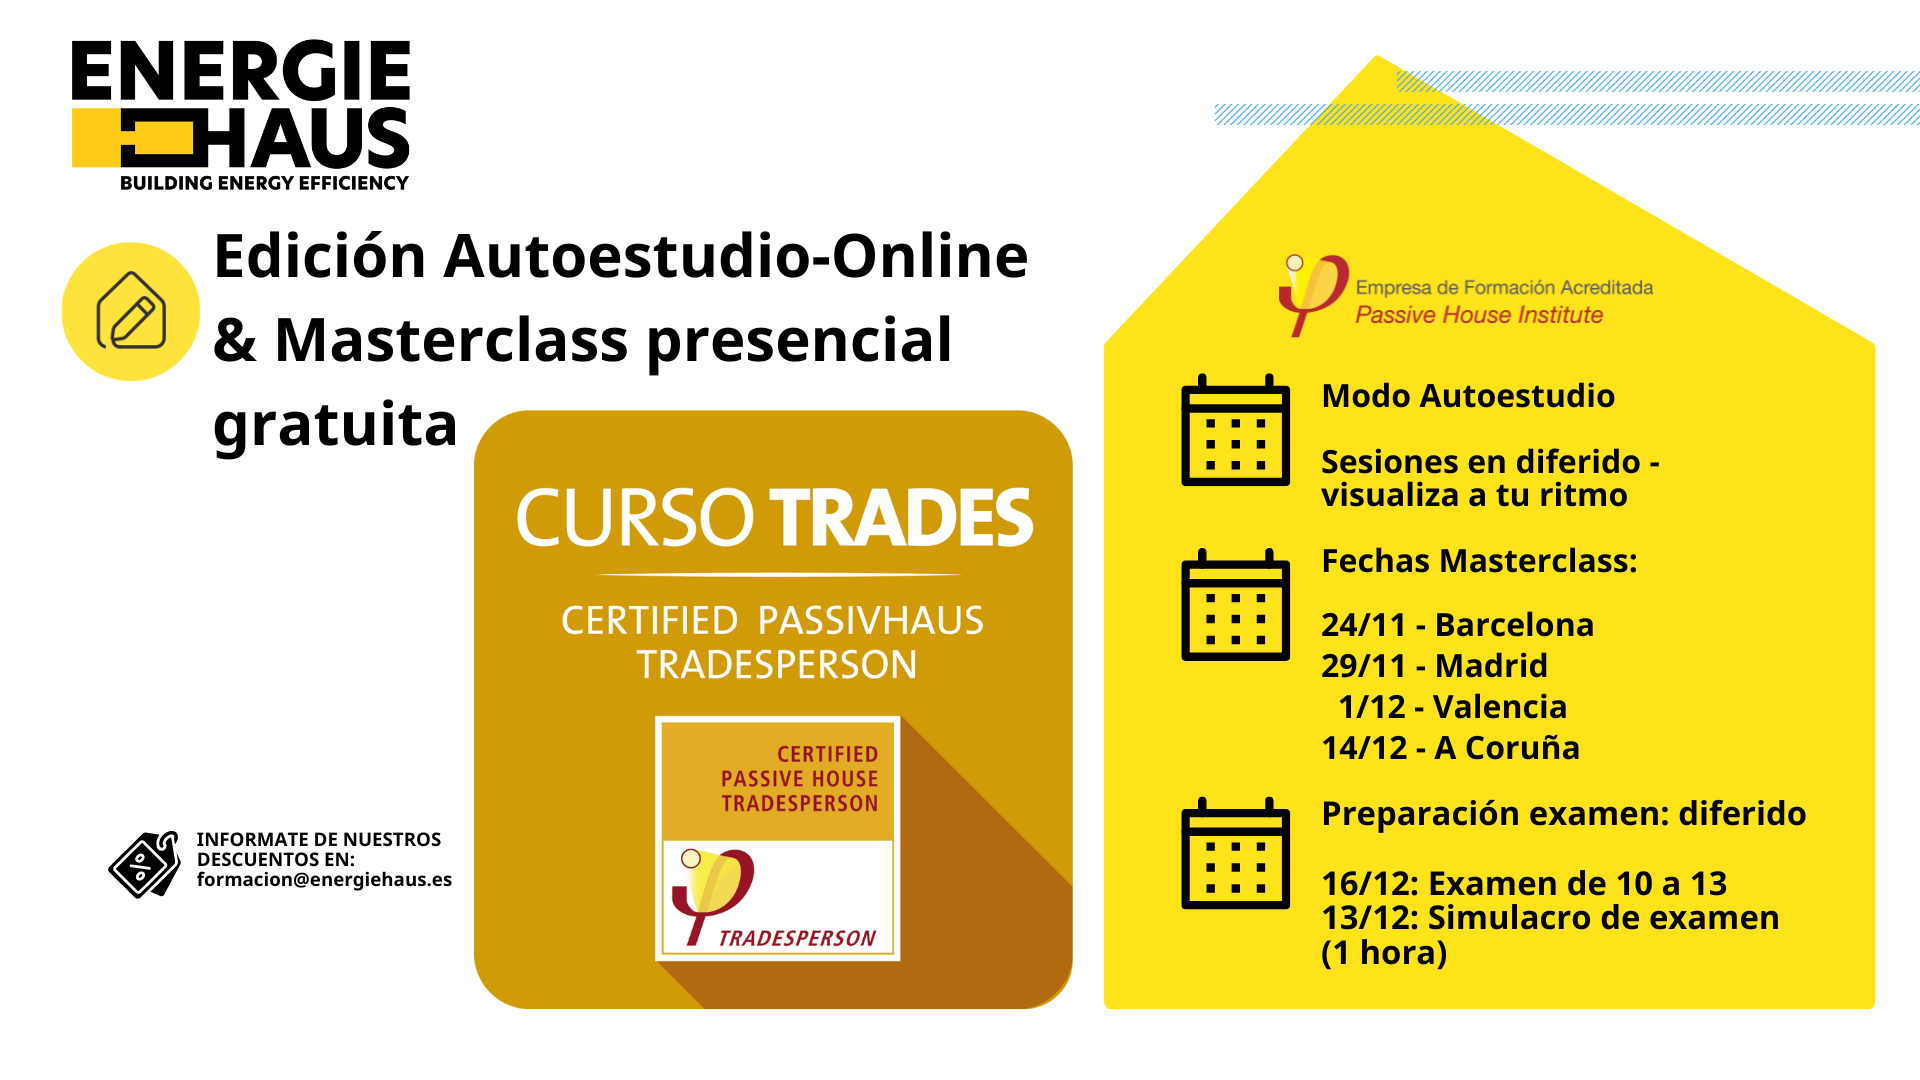 Tradesperson - Autoestudio-Online & Masterclass presencial gratuita (Barcelona; Madrid, Valencia, A Coruña)